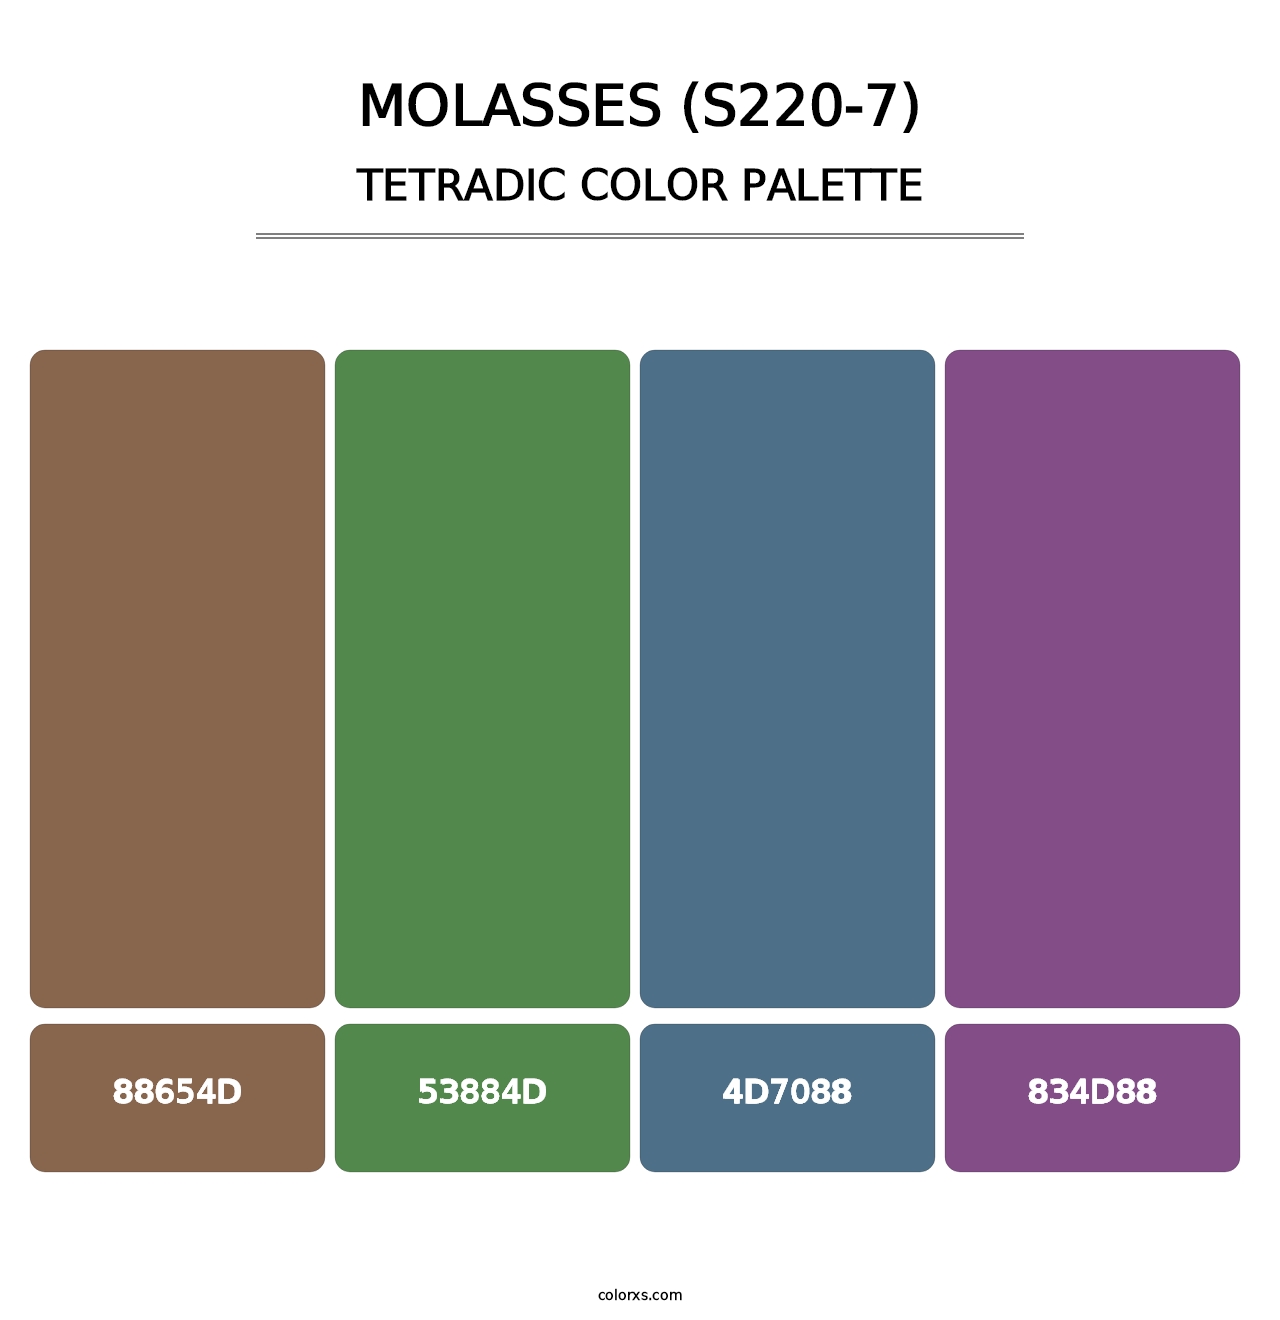 Molasses (S220-7) - Tetradic Color Palette